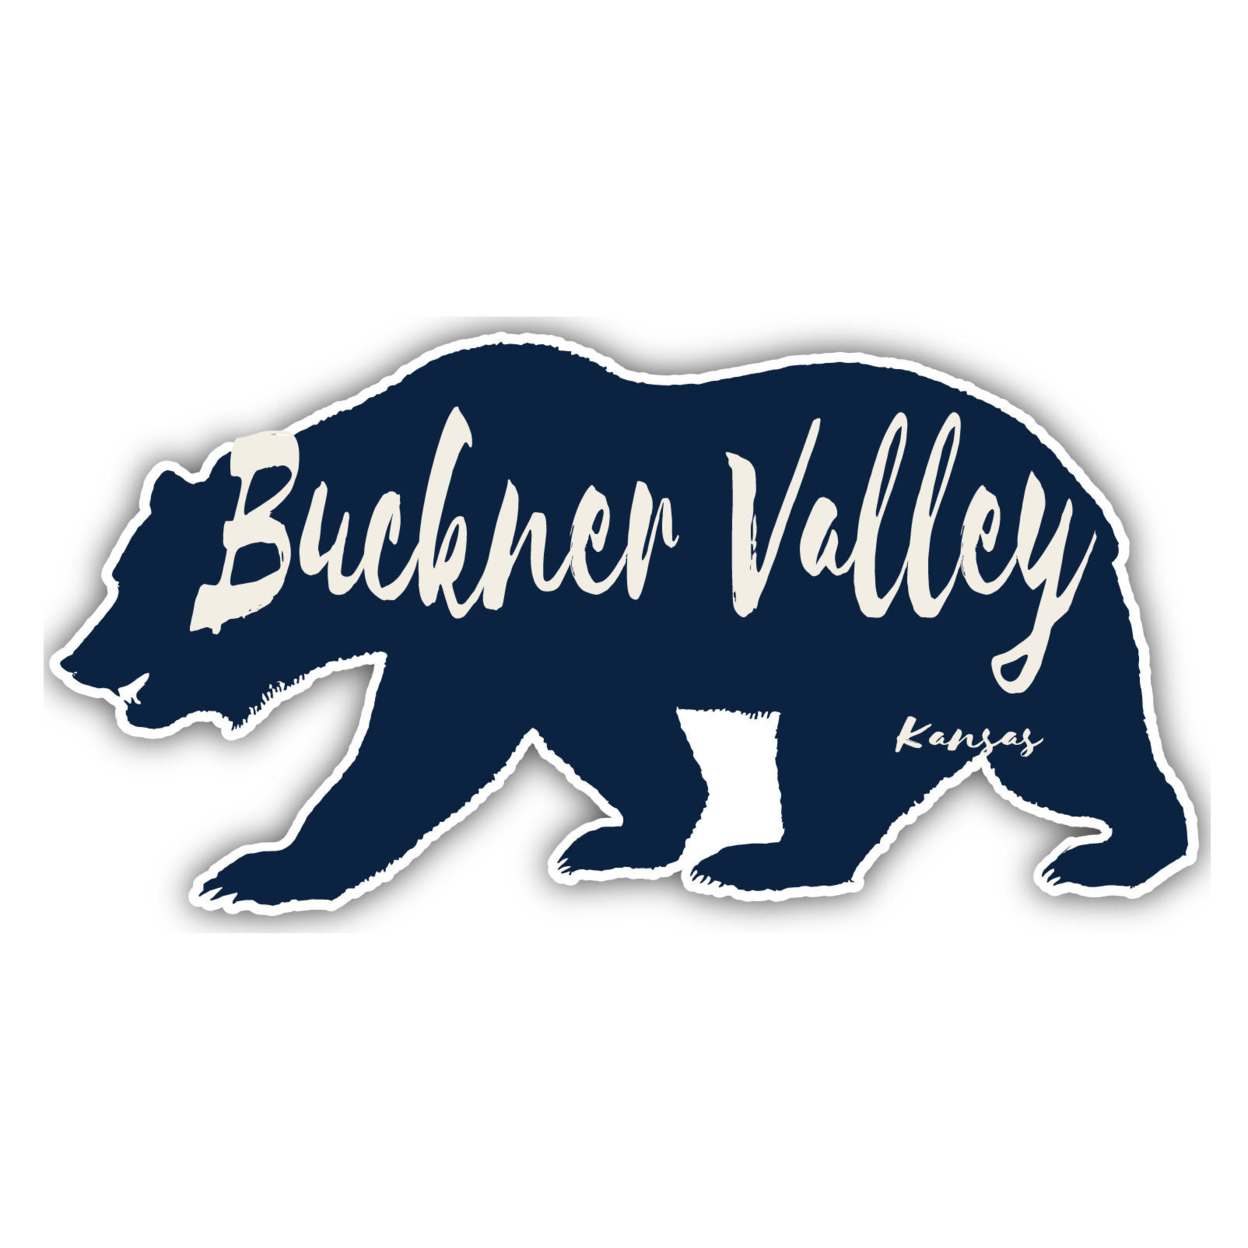 Buckner Valley Kansas Souvenir Decorative Stickers (Choose Theme And Size) - 4-Pack, 6-Inch, Bear